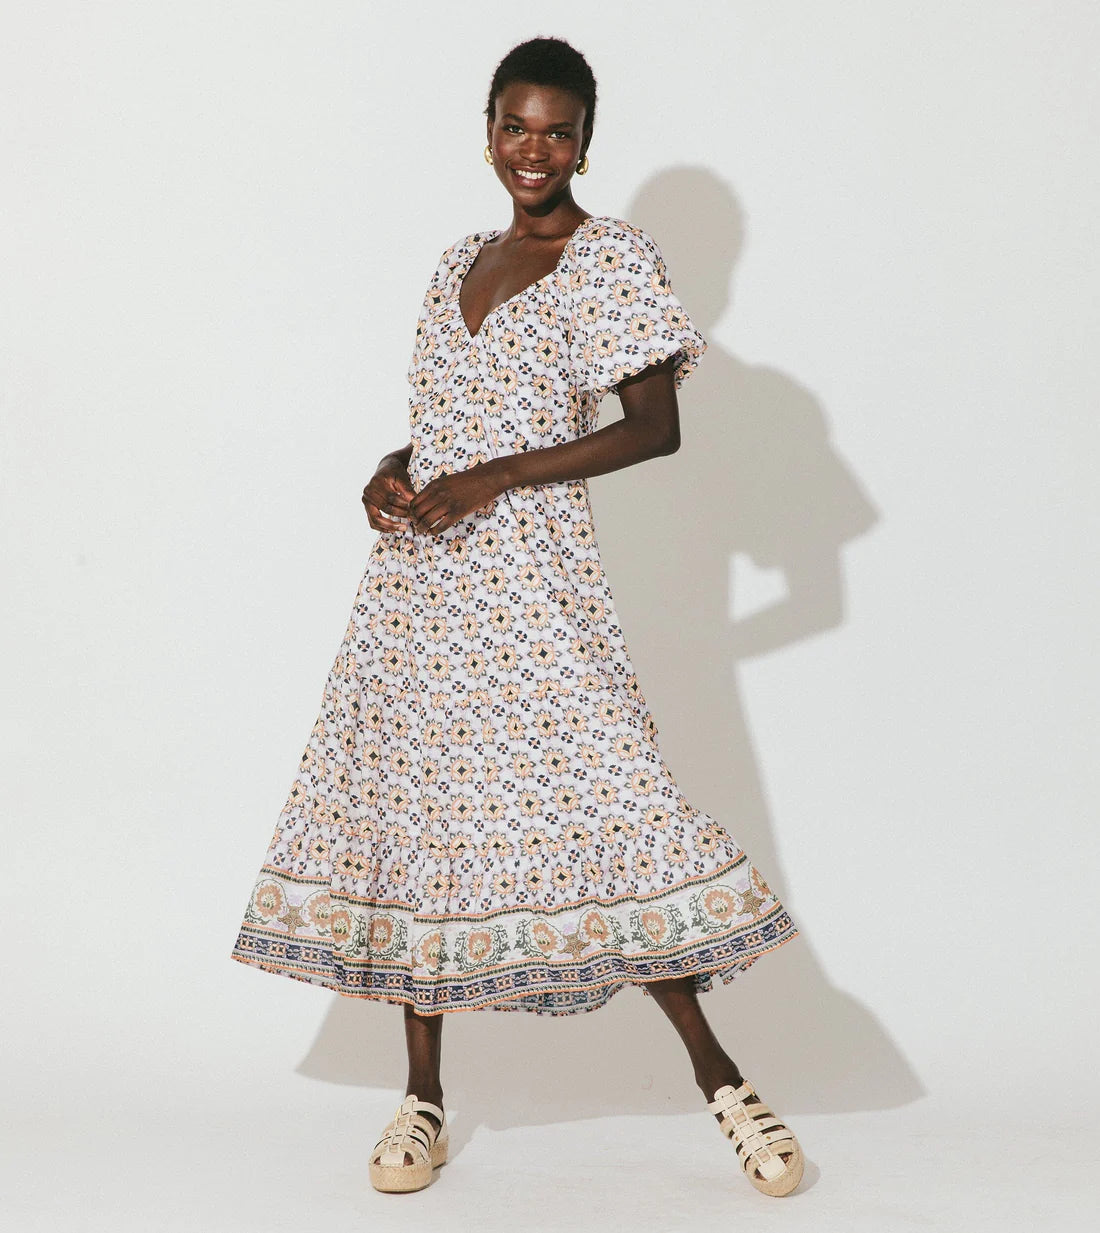 Paula Midi Dress in marrakesh print by Cleobella